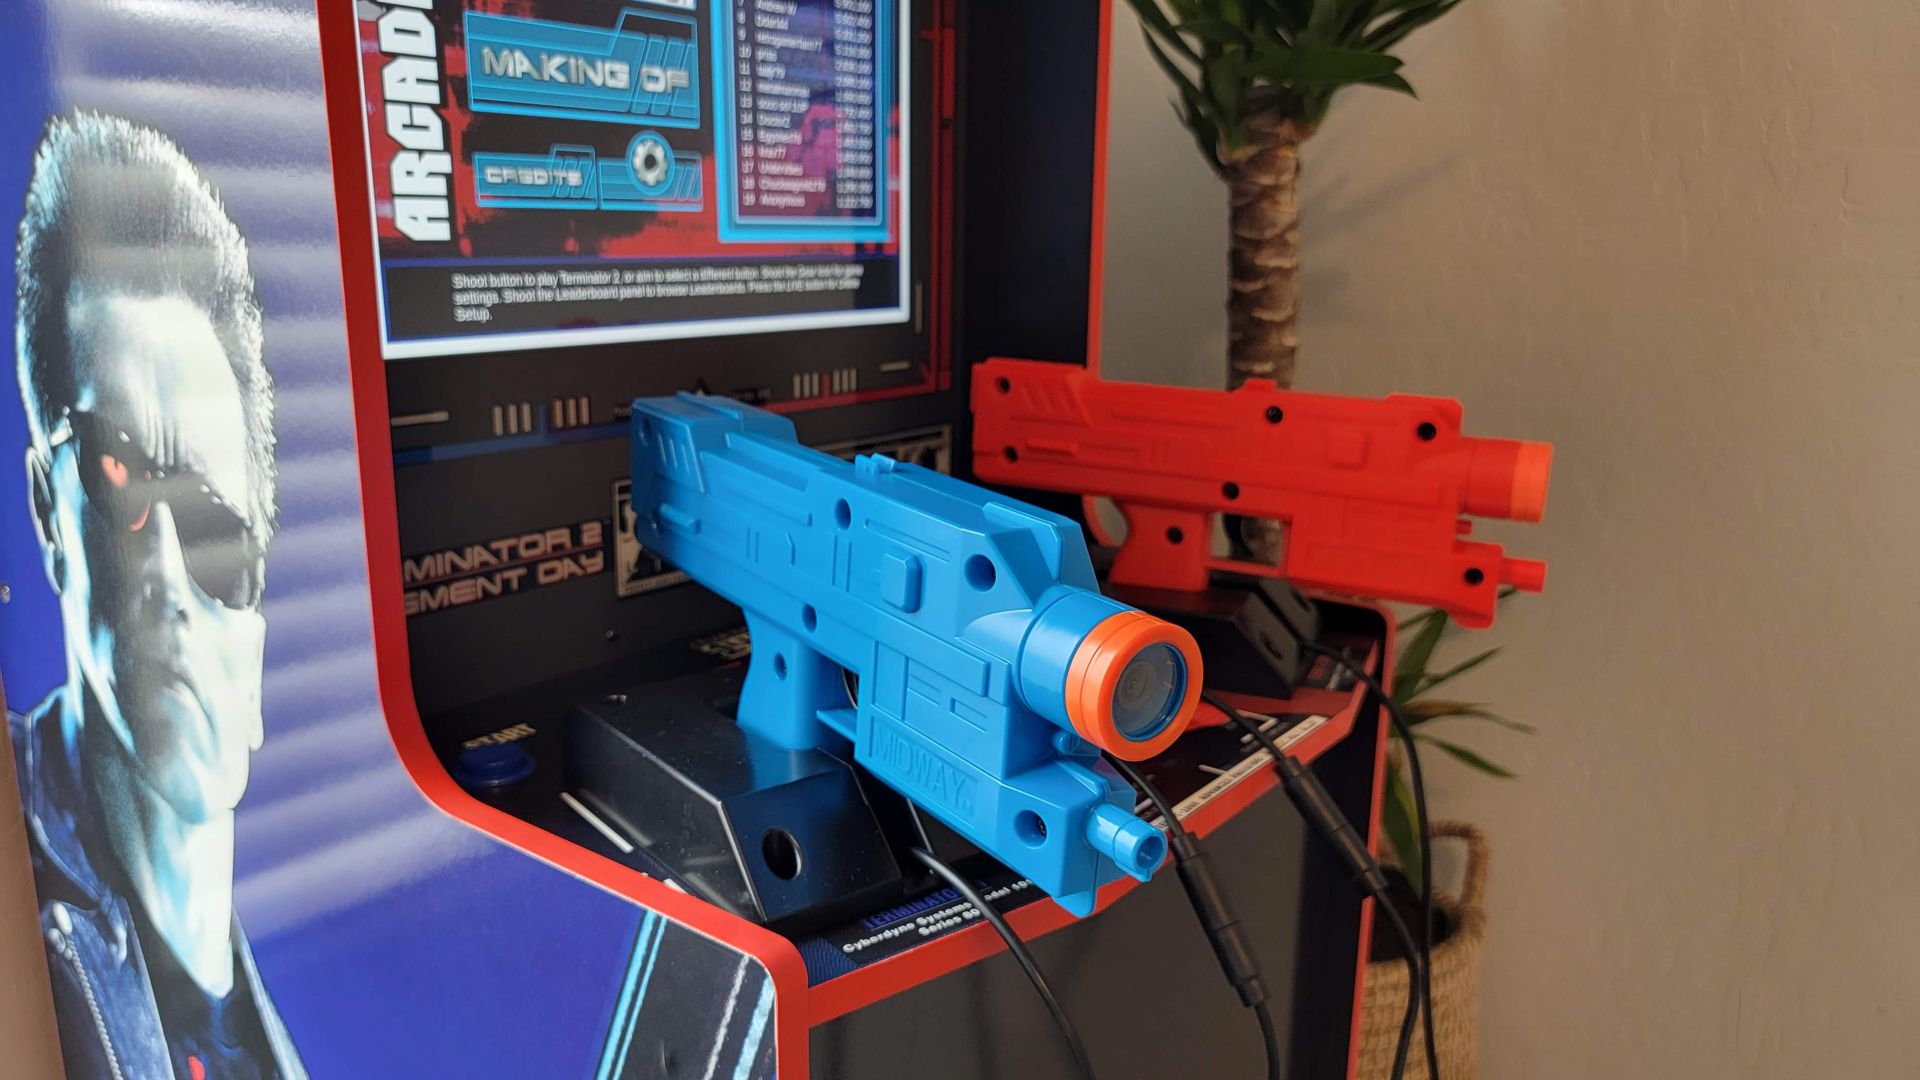 Terminator 2 arcade cabinet with light guns.